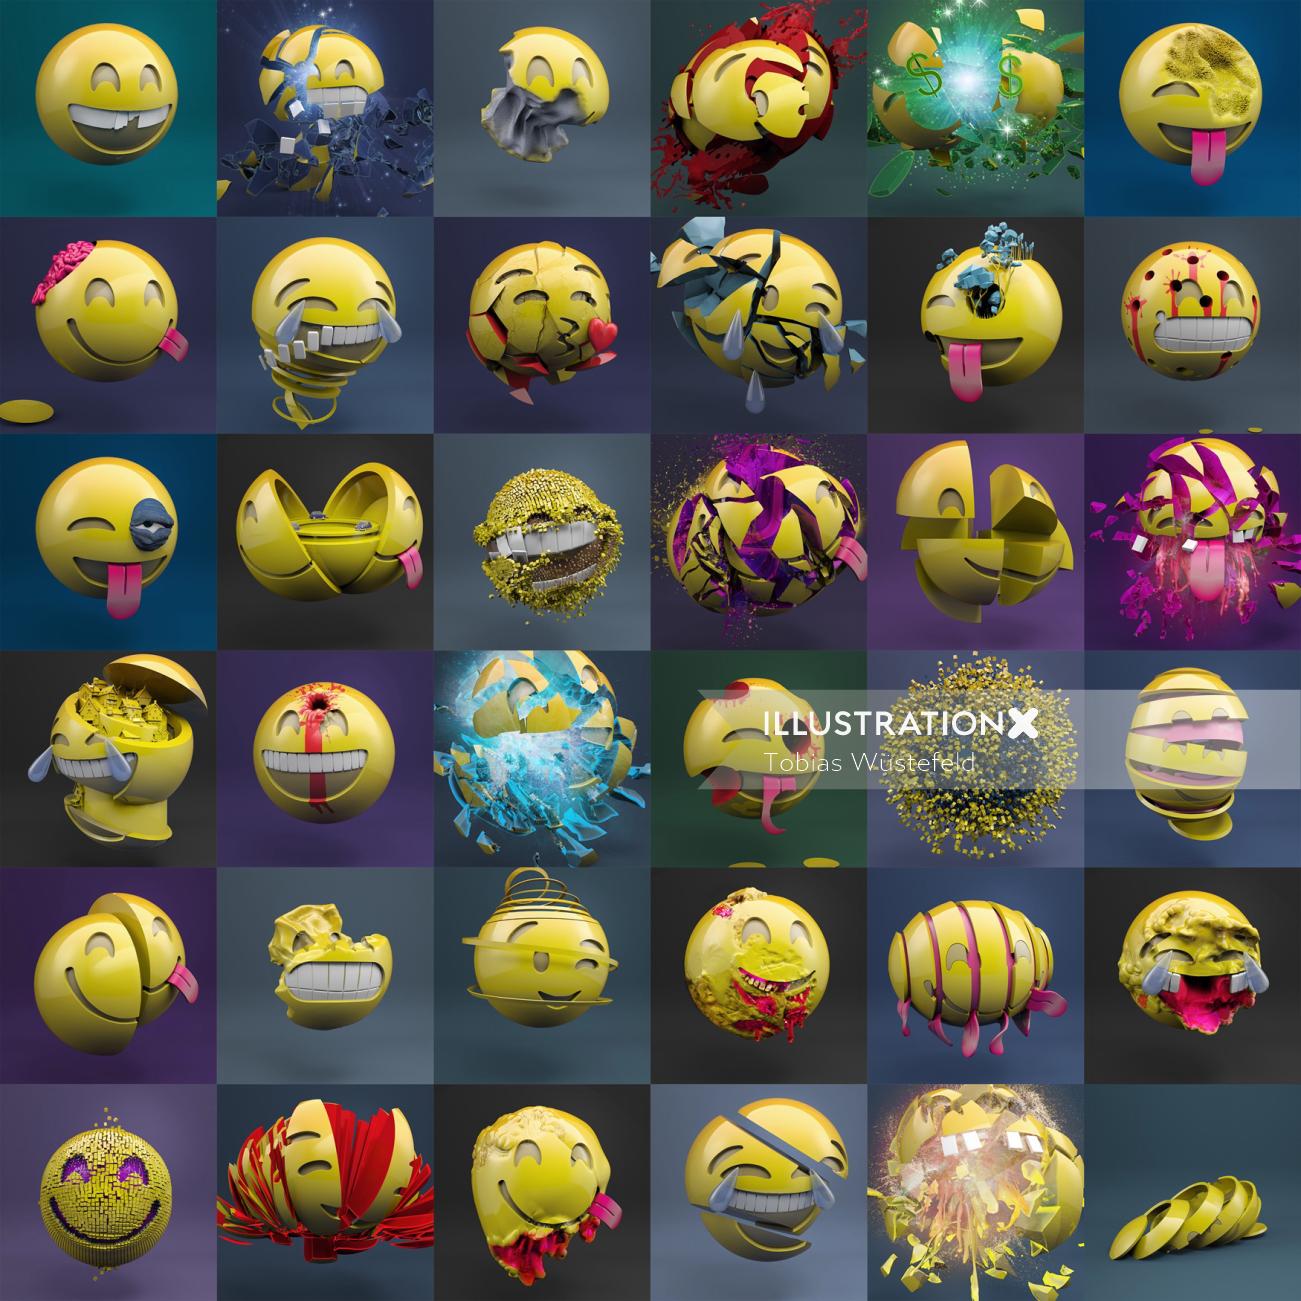 Character design of emoji's